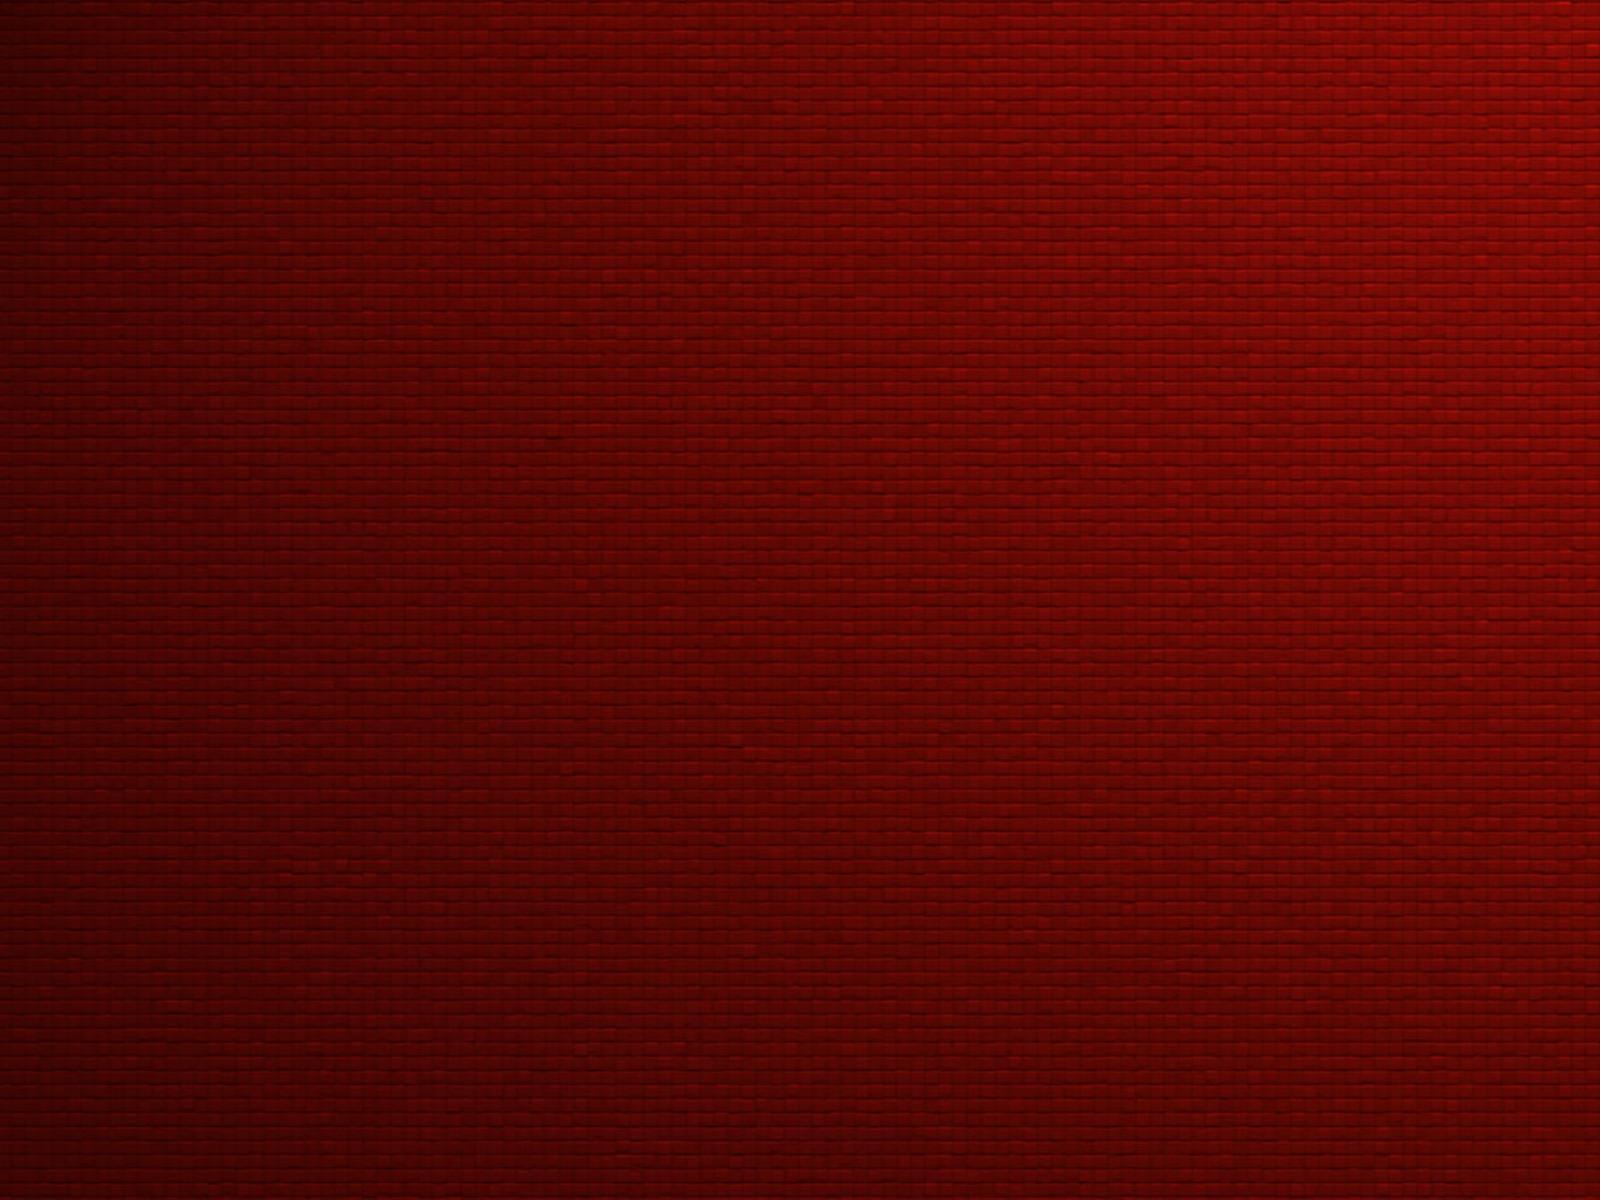 1600x1200 Red Desktop Wallpaper Abstract Red Wallpaper 1600x1200